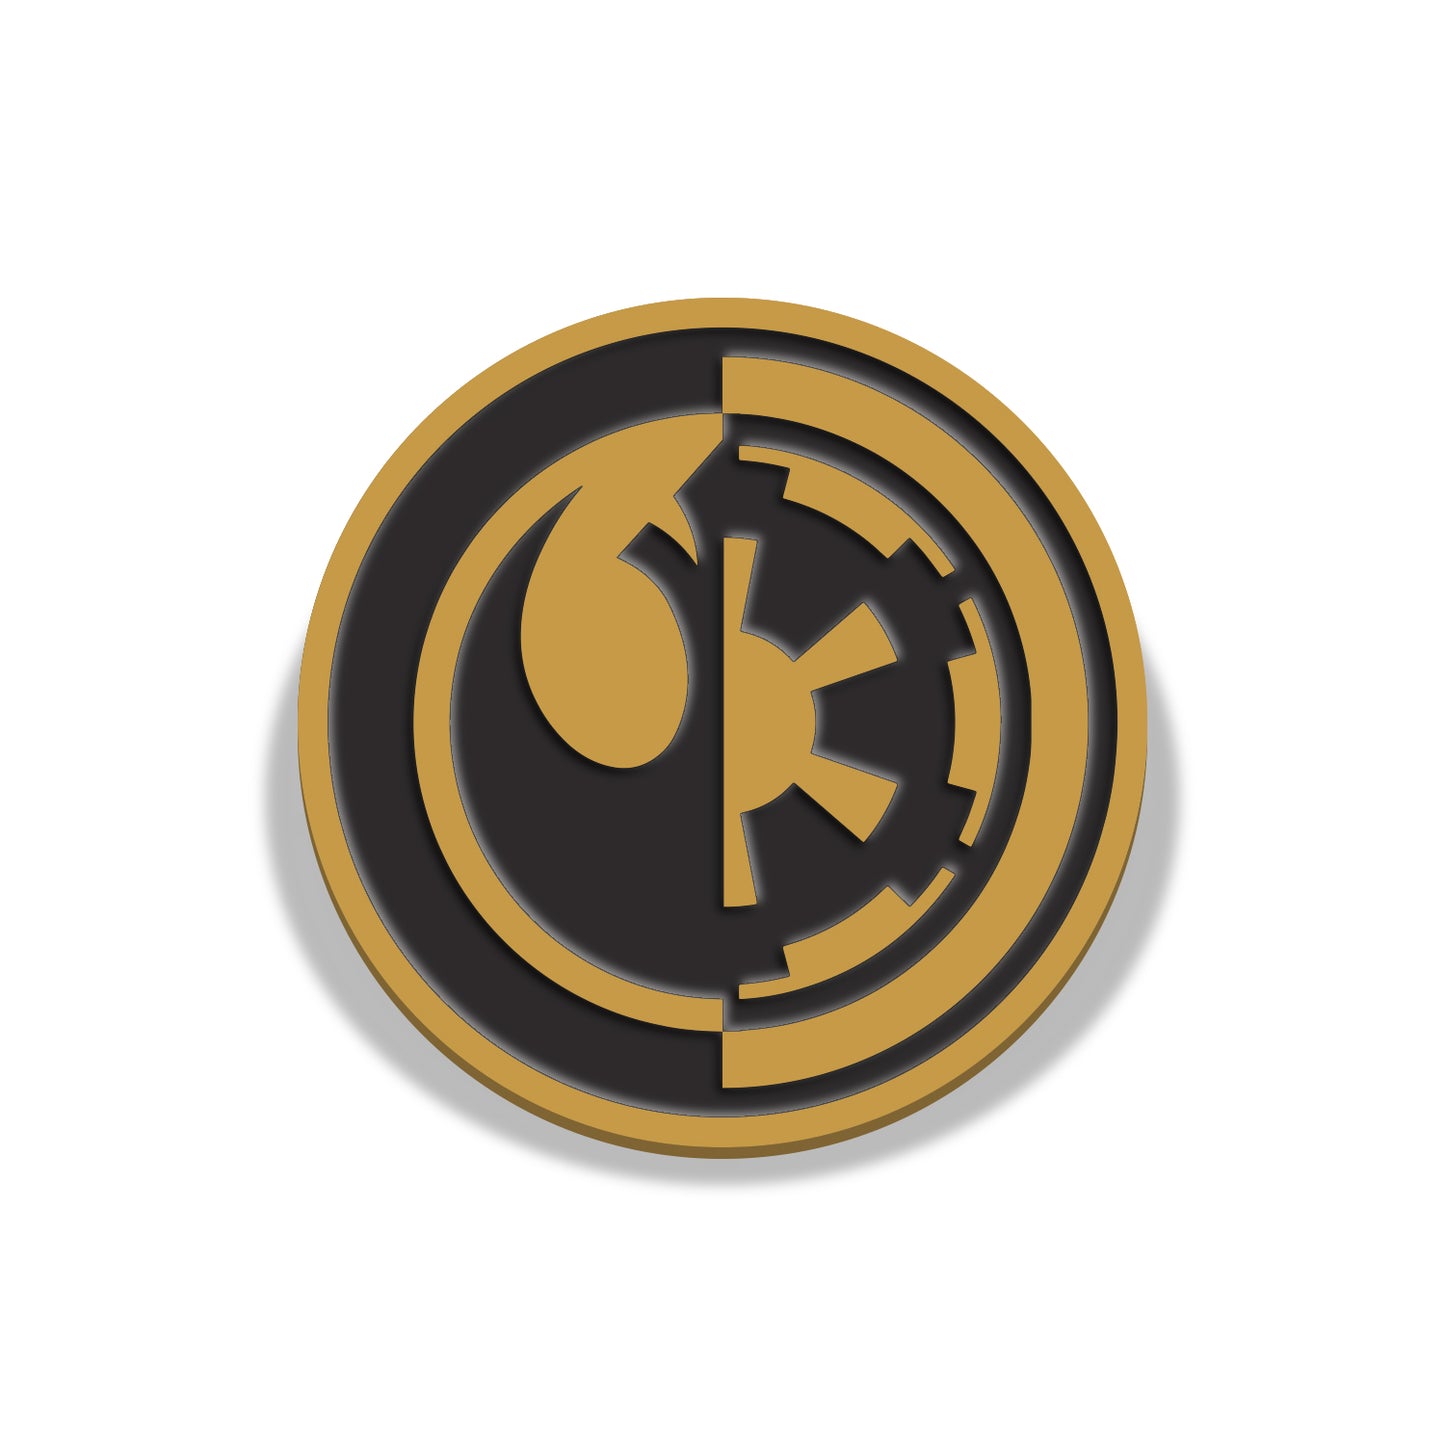 Matt Ferguson "Return of the Jedi: Meet Your Destiny" Timed Edition + FREE PIN!